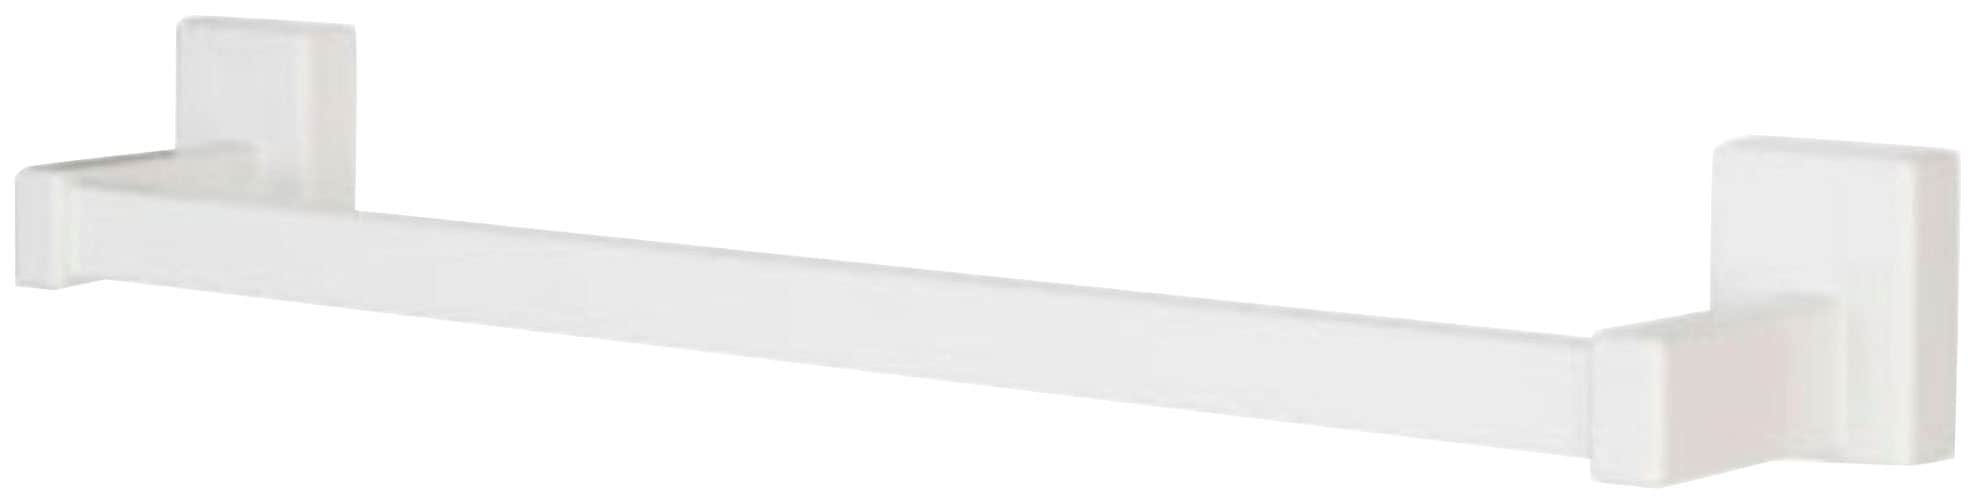 Ximax Handtuchhalter »Handtuchstange, magnetisch«, Handtuchstange, magnetisch, 400 mm, Weiß